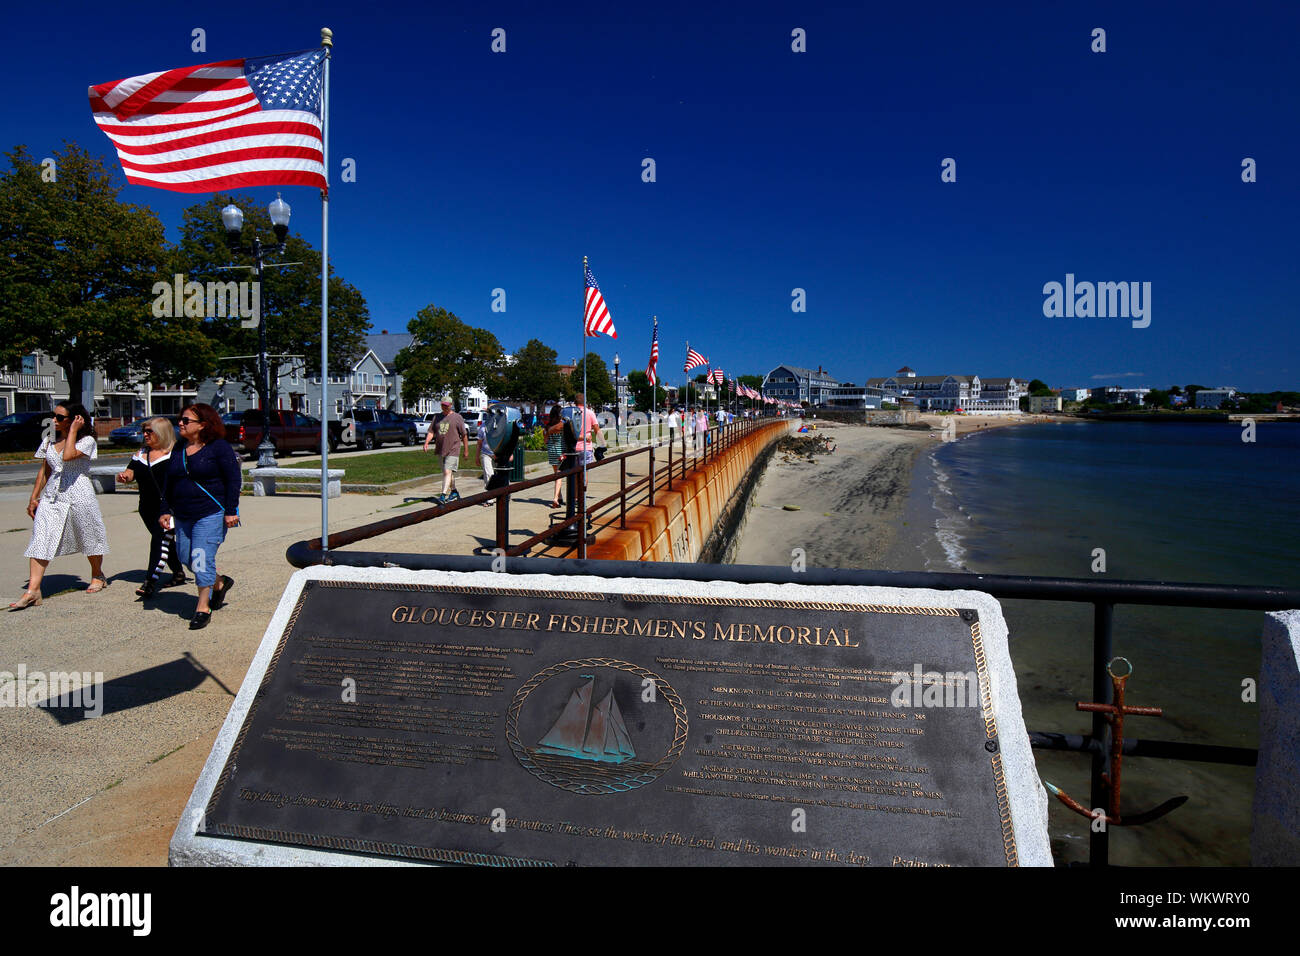 Gloucester Fishermens Memorial Plaque, Stacey Boulevard, Gloucester, Massachusetts (24. August 2019) Stockfoto